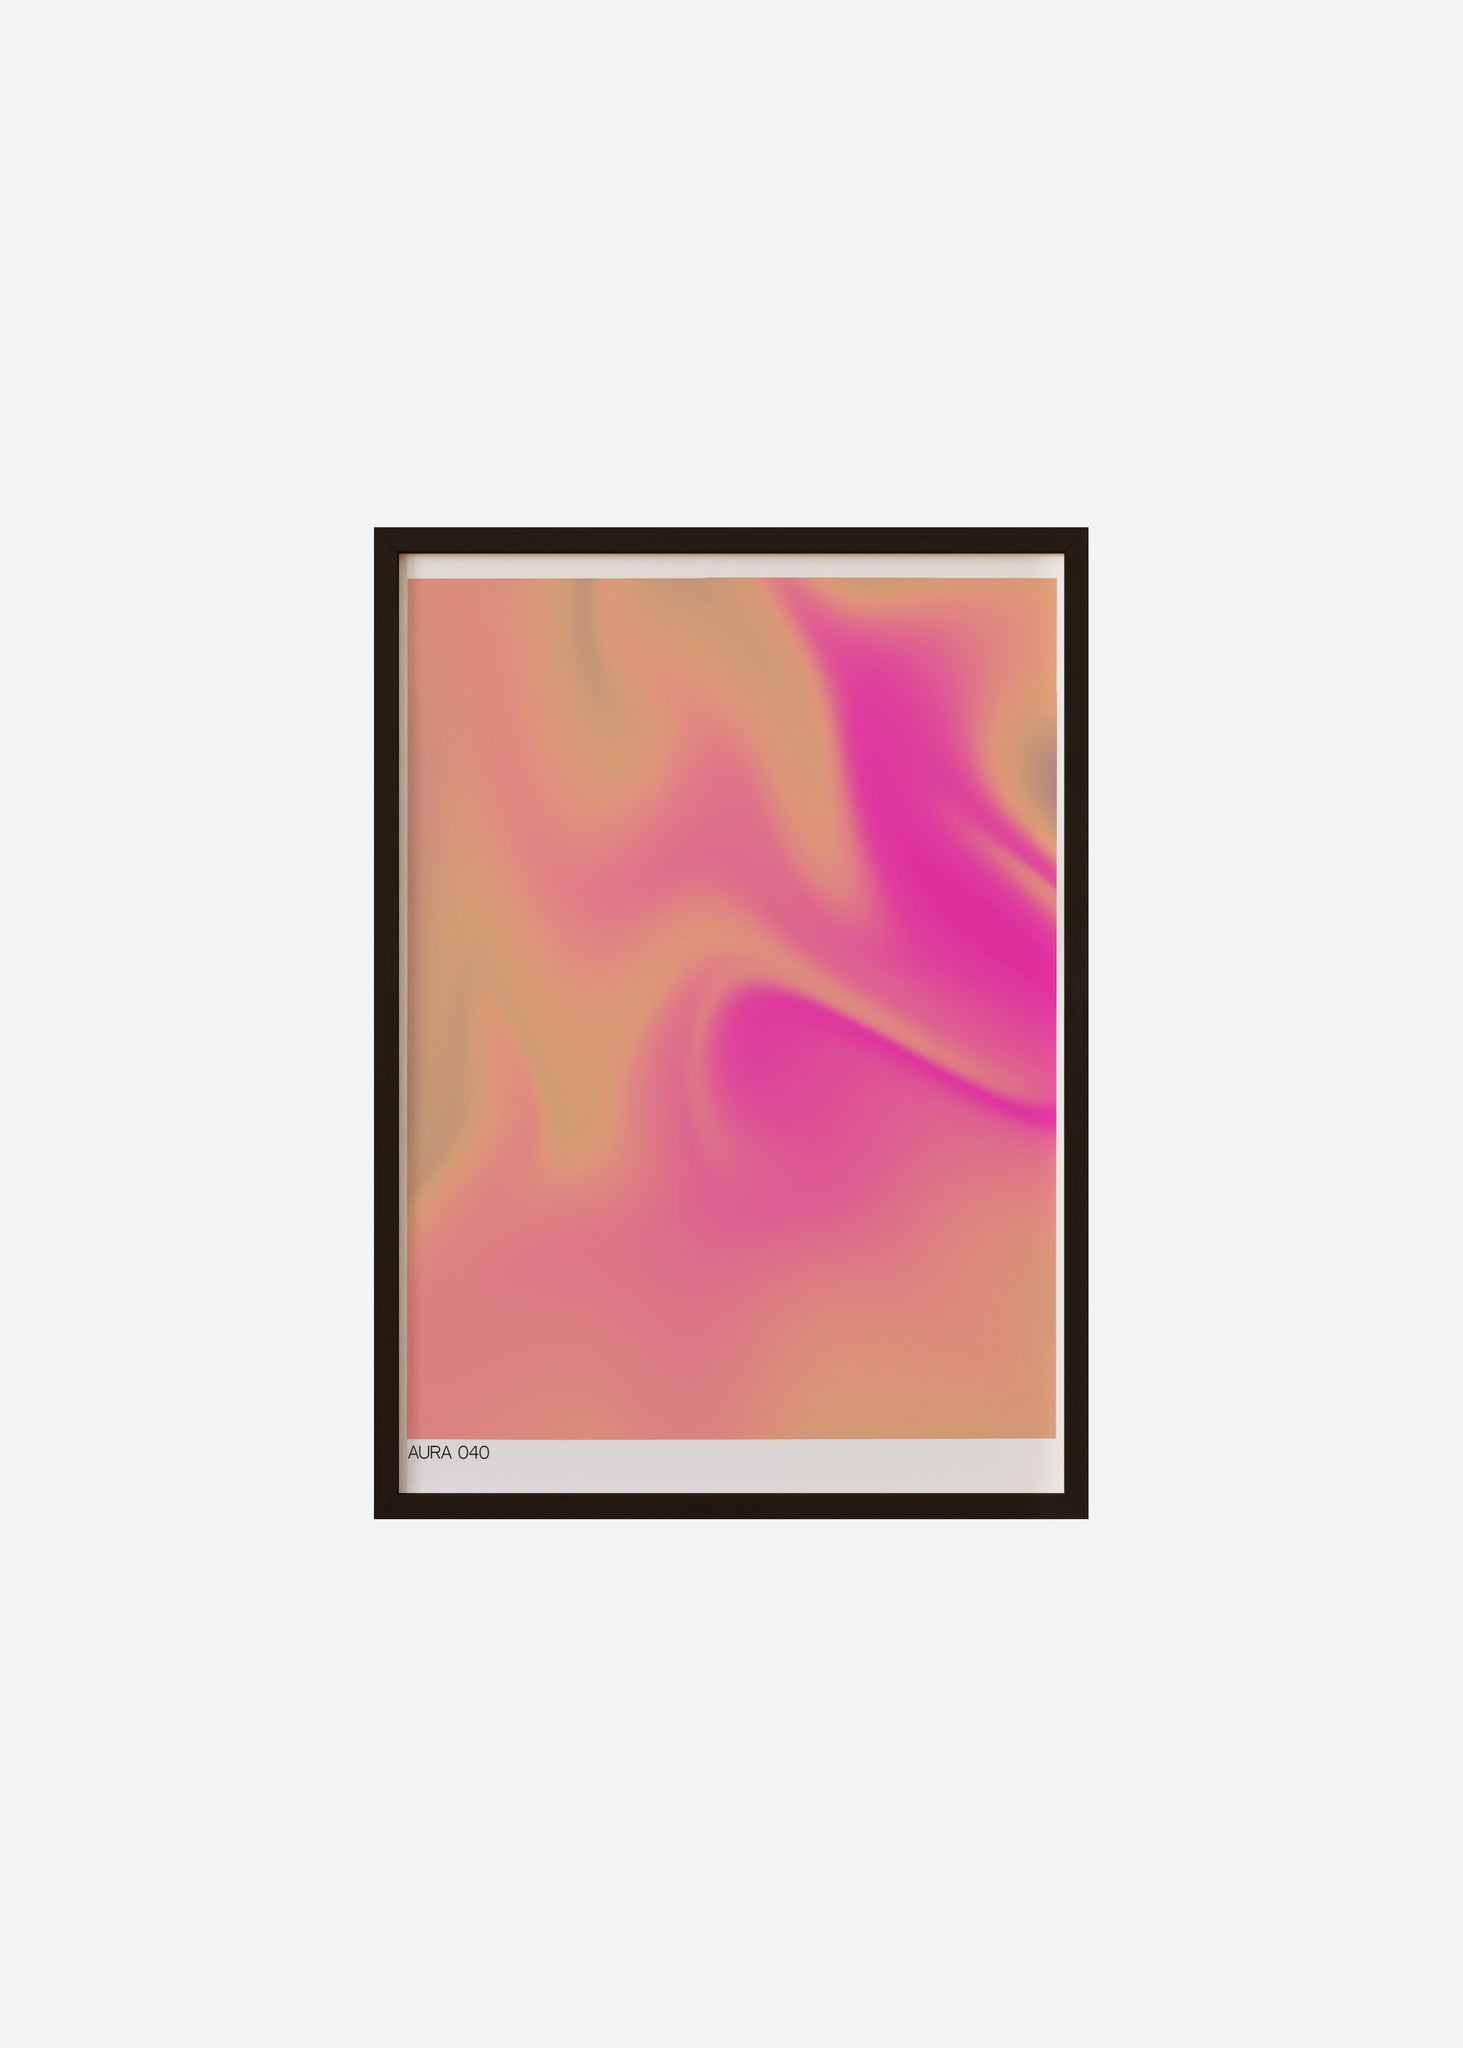 aura 040 Framed Print